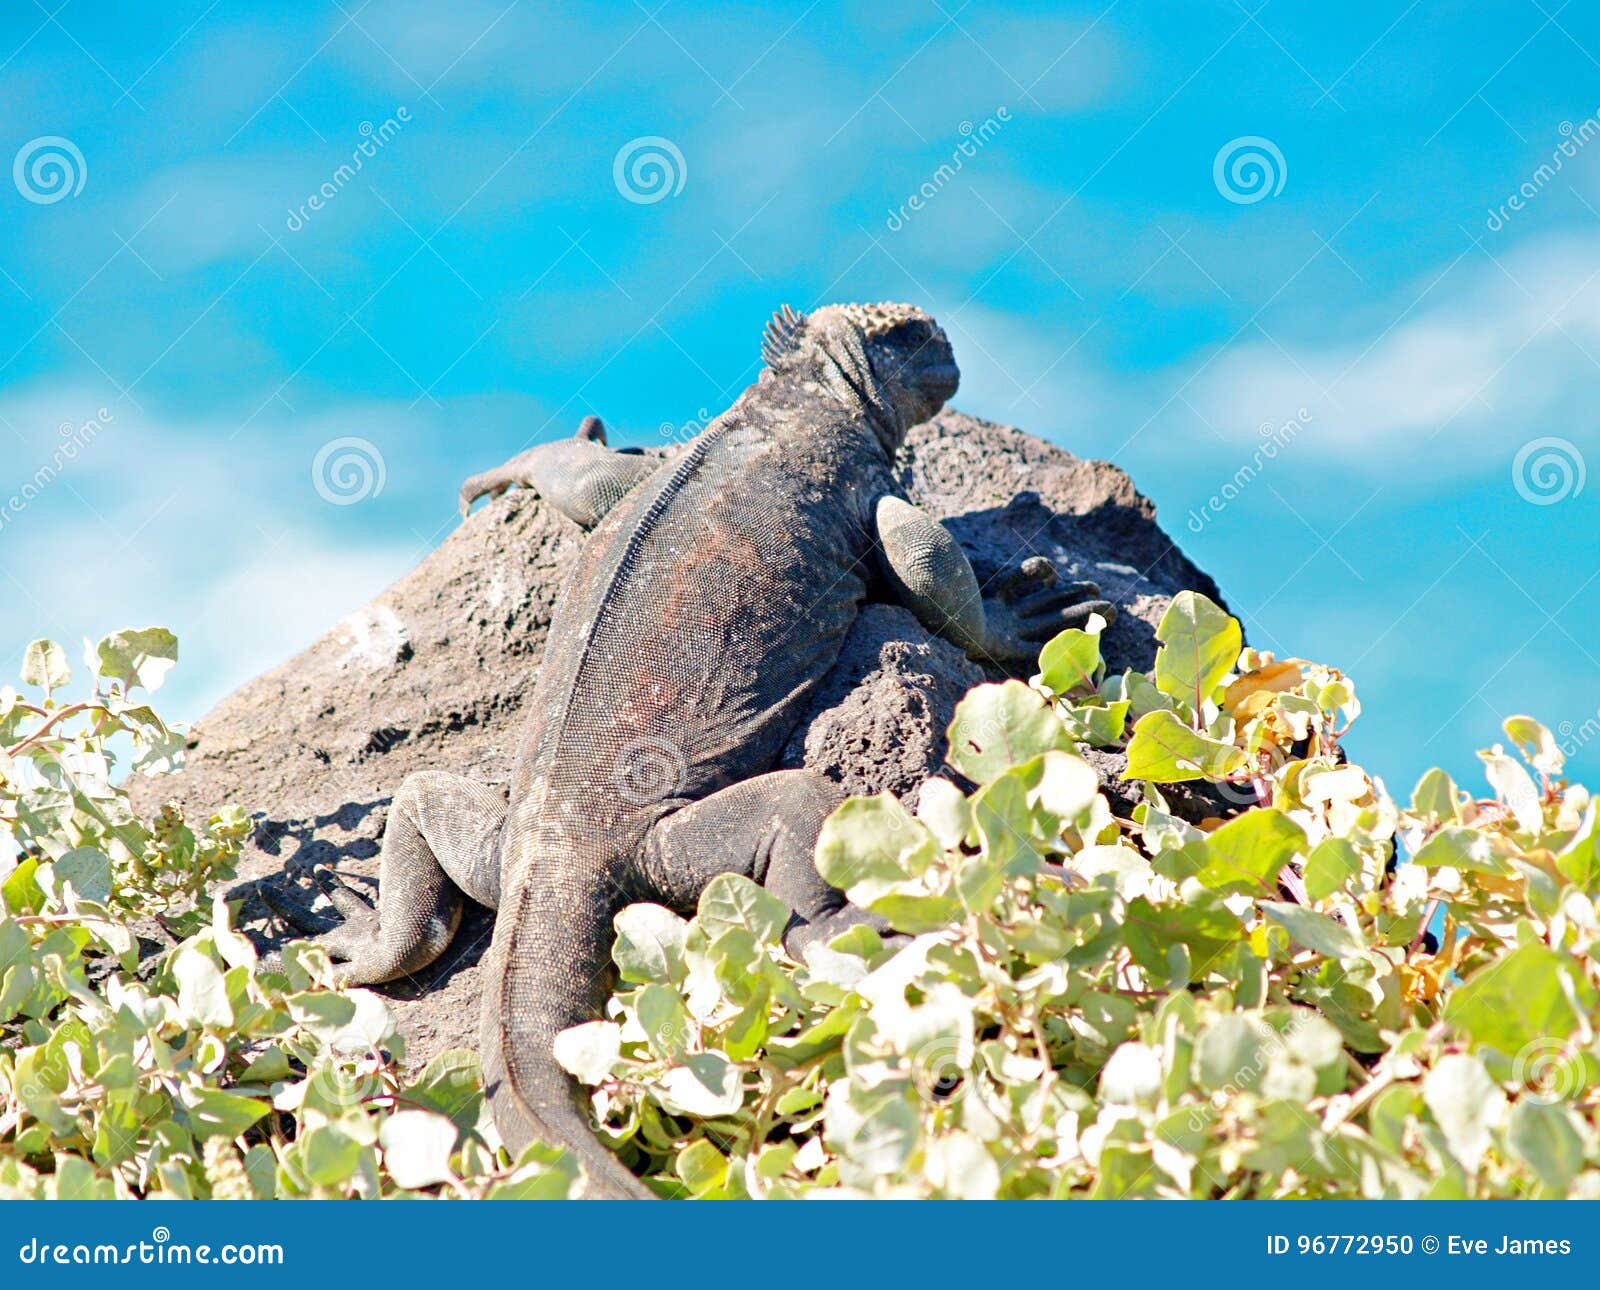 galapagos marine iguana amblyrhynchus cristatus